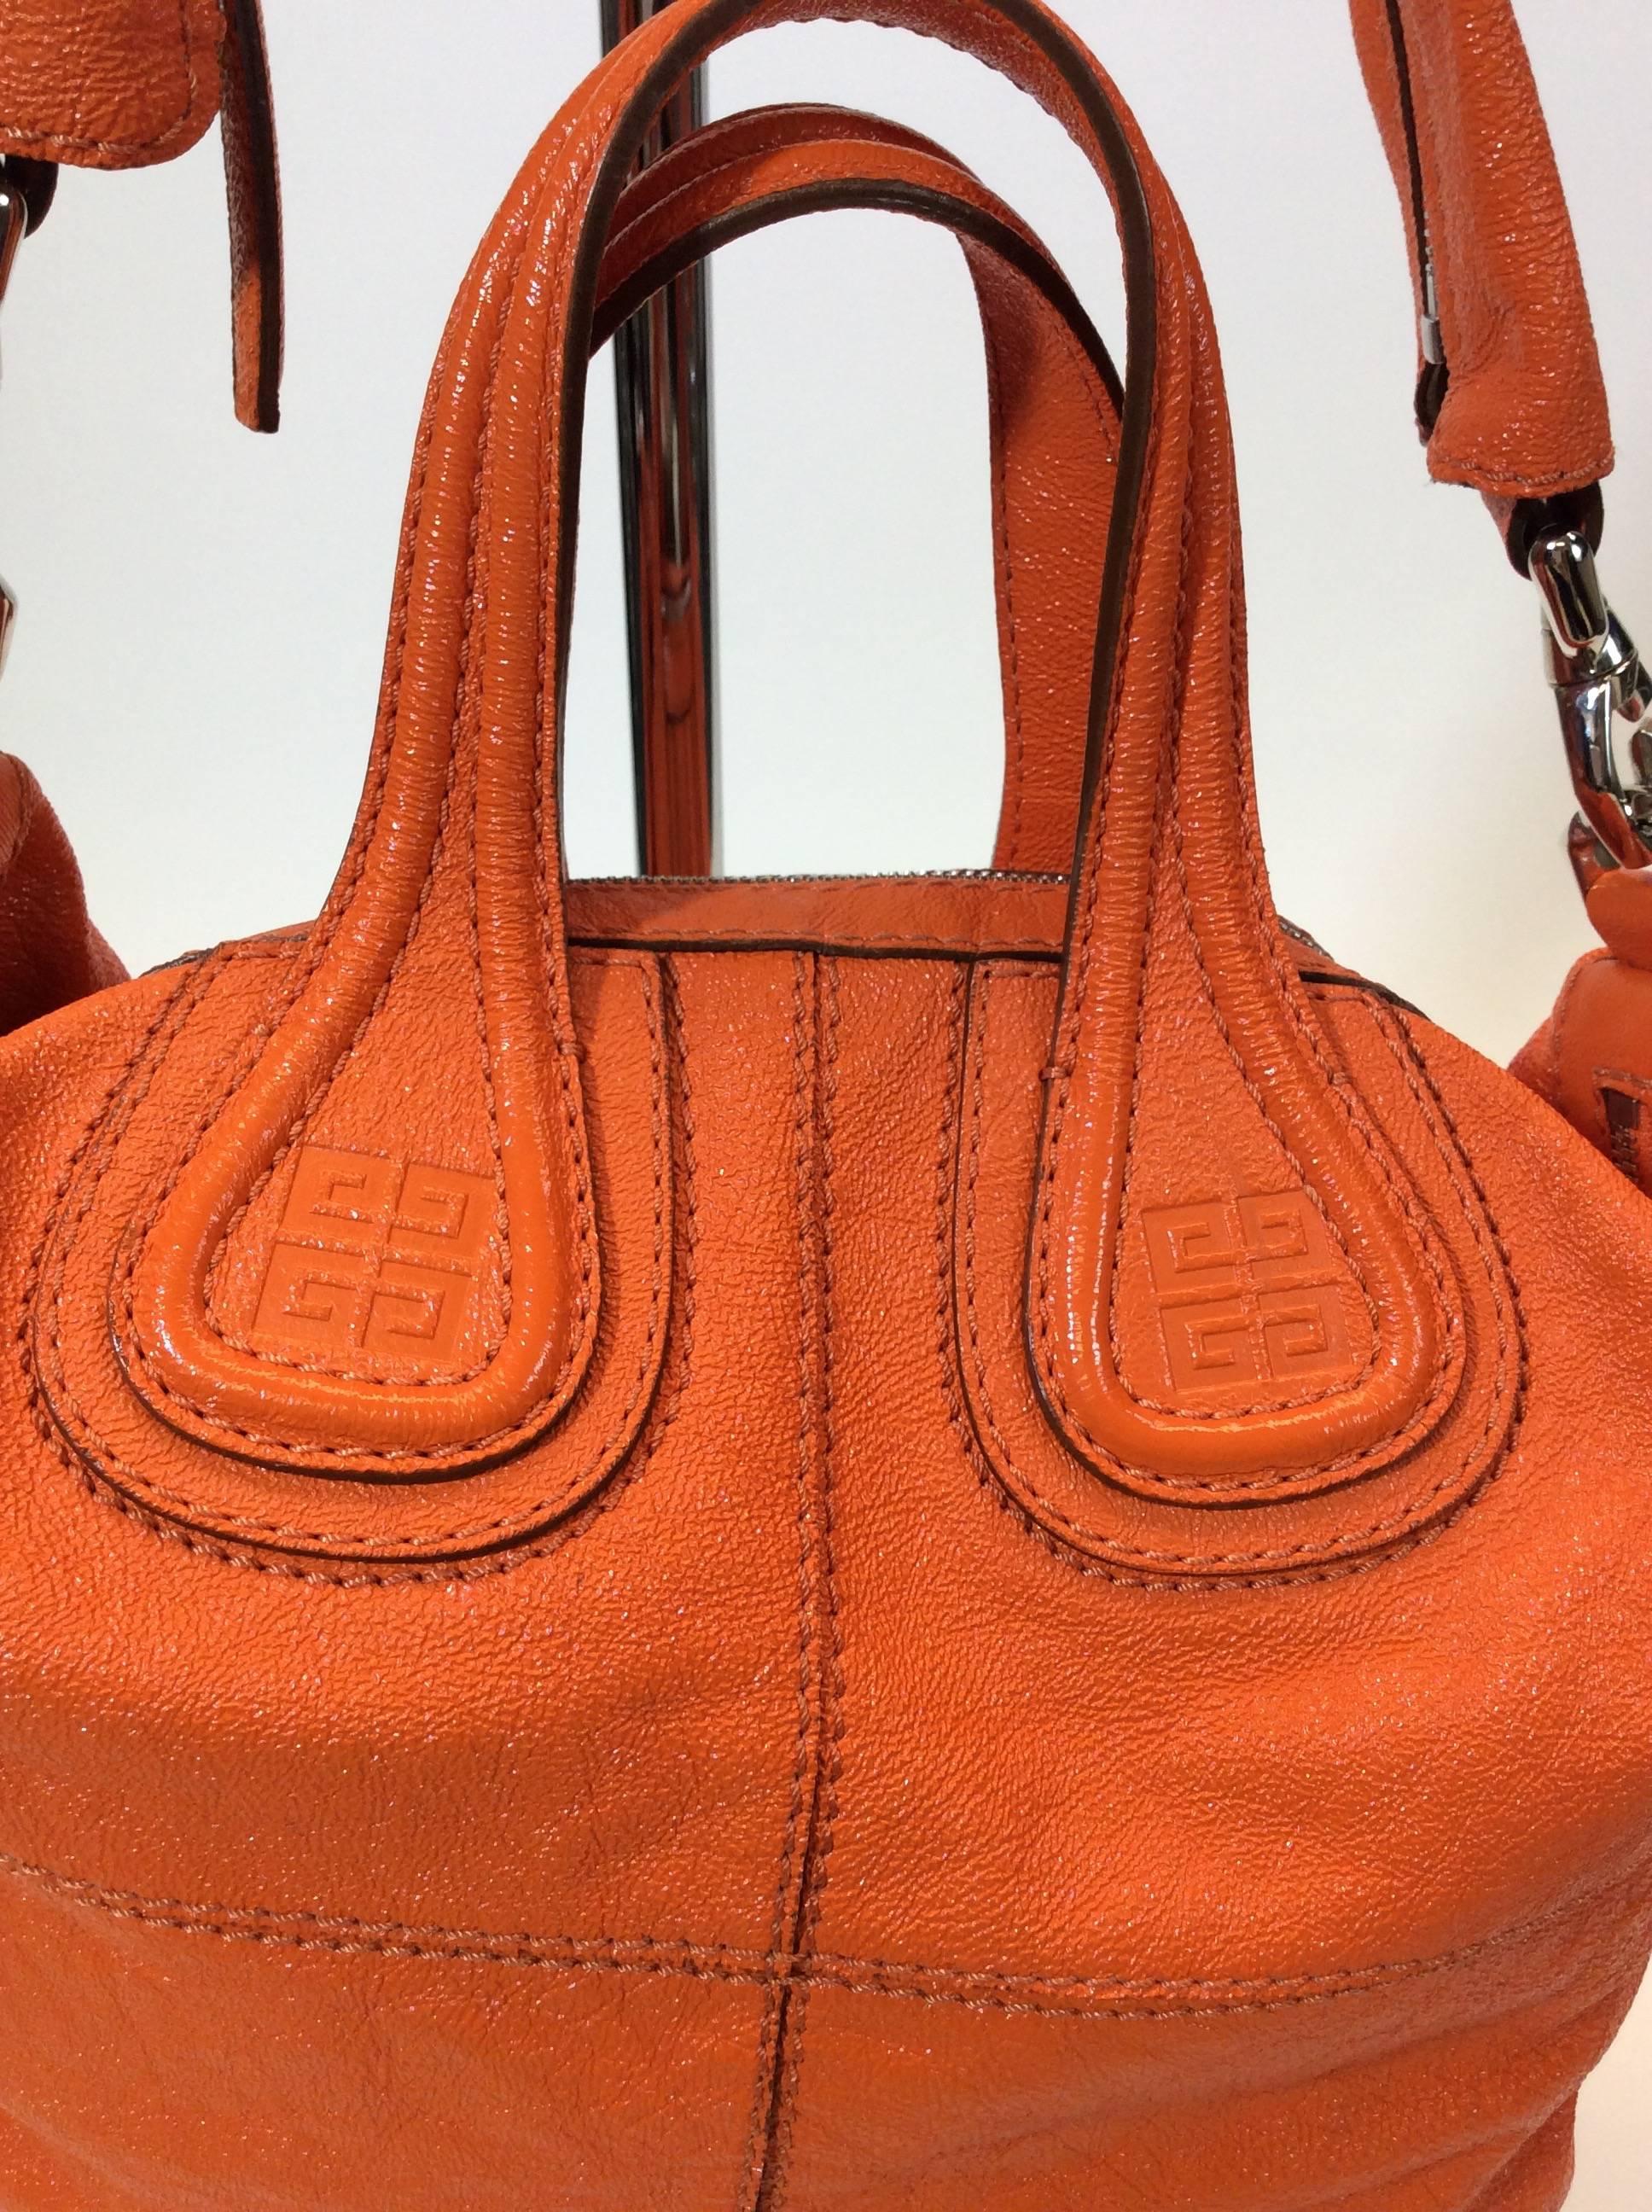 Givenchy Orange Leather Hobo Bag For Sale 1